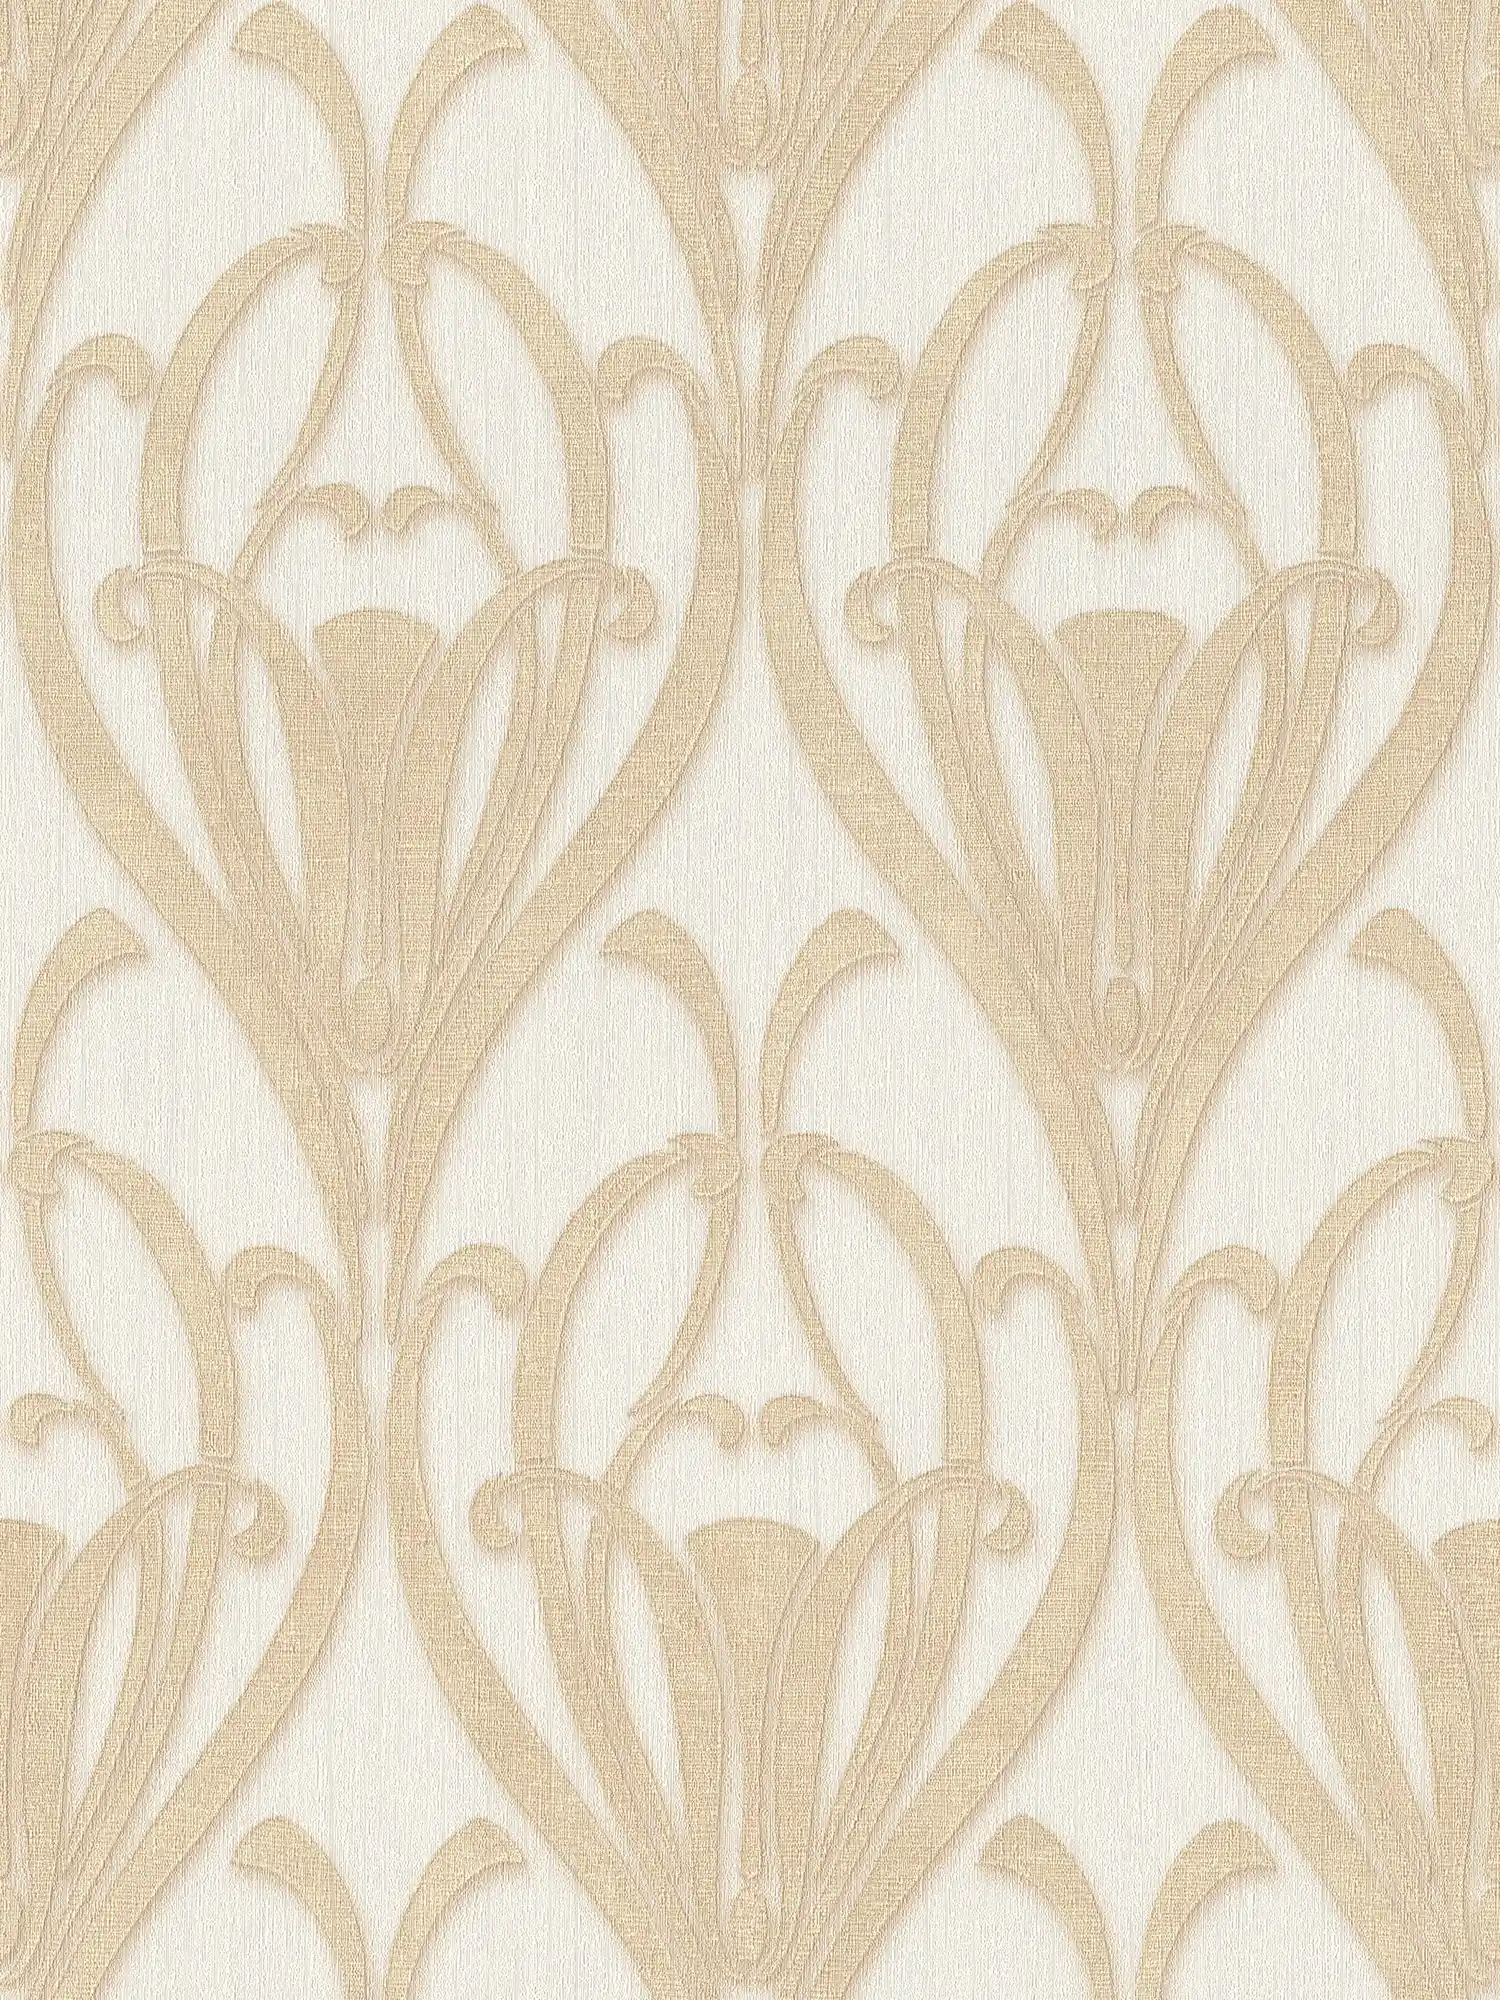 Art Deco wallpaper with golden pattern & textile texture
